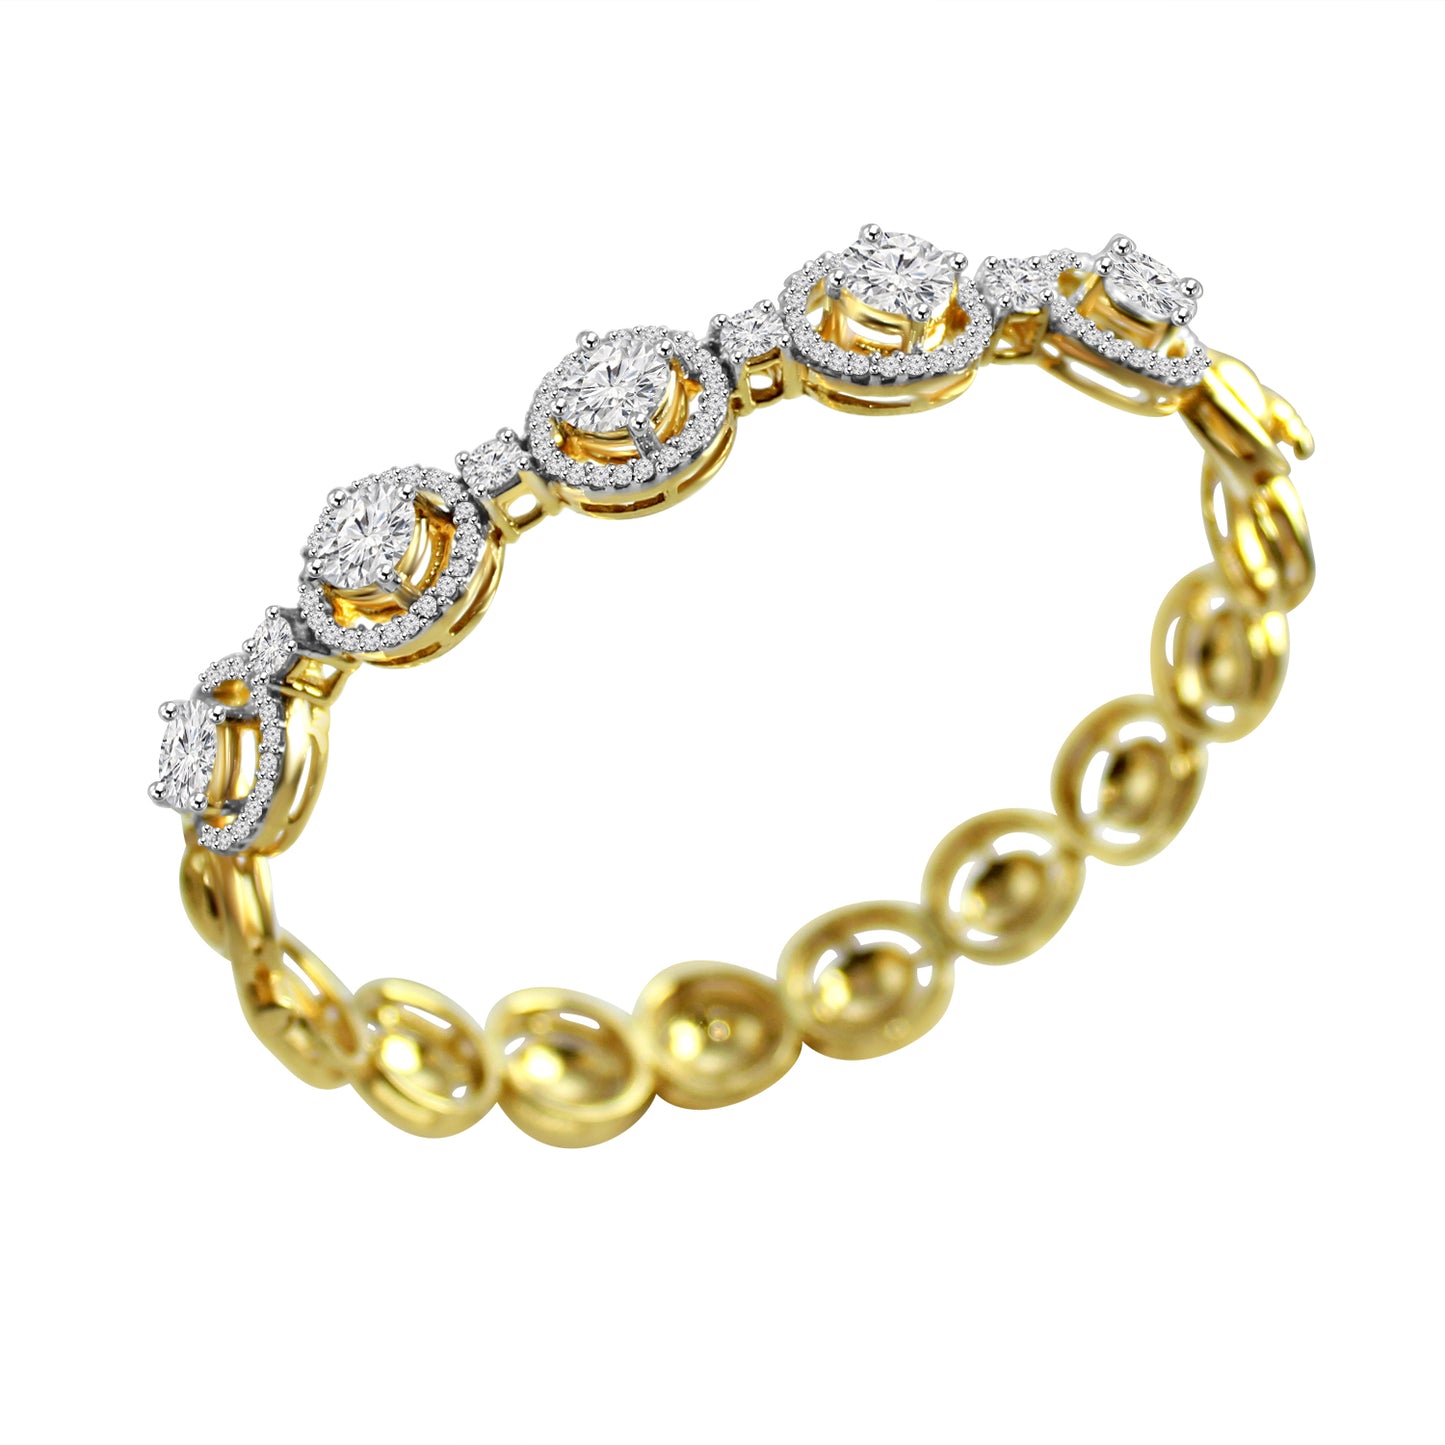 Fancy Cut Moissanite Diamond Bracelet at Rs 155000 | हीरे के कंगन in Ajmer  | ID: 22340870533